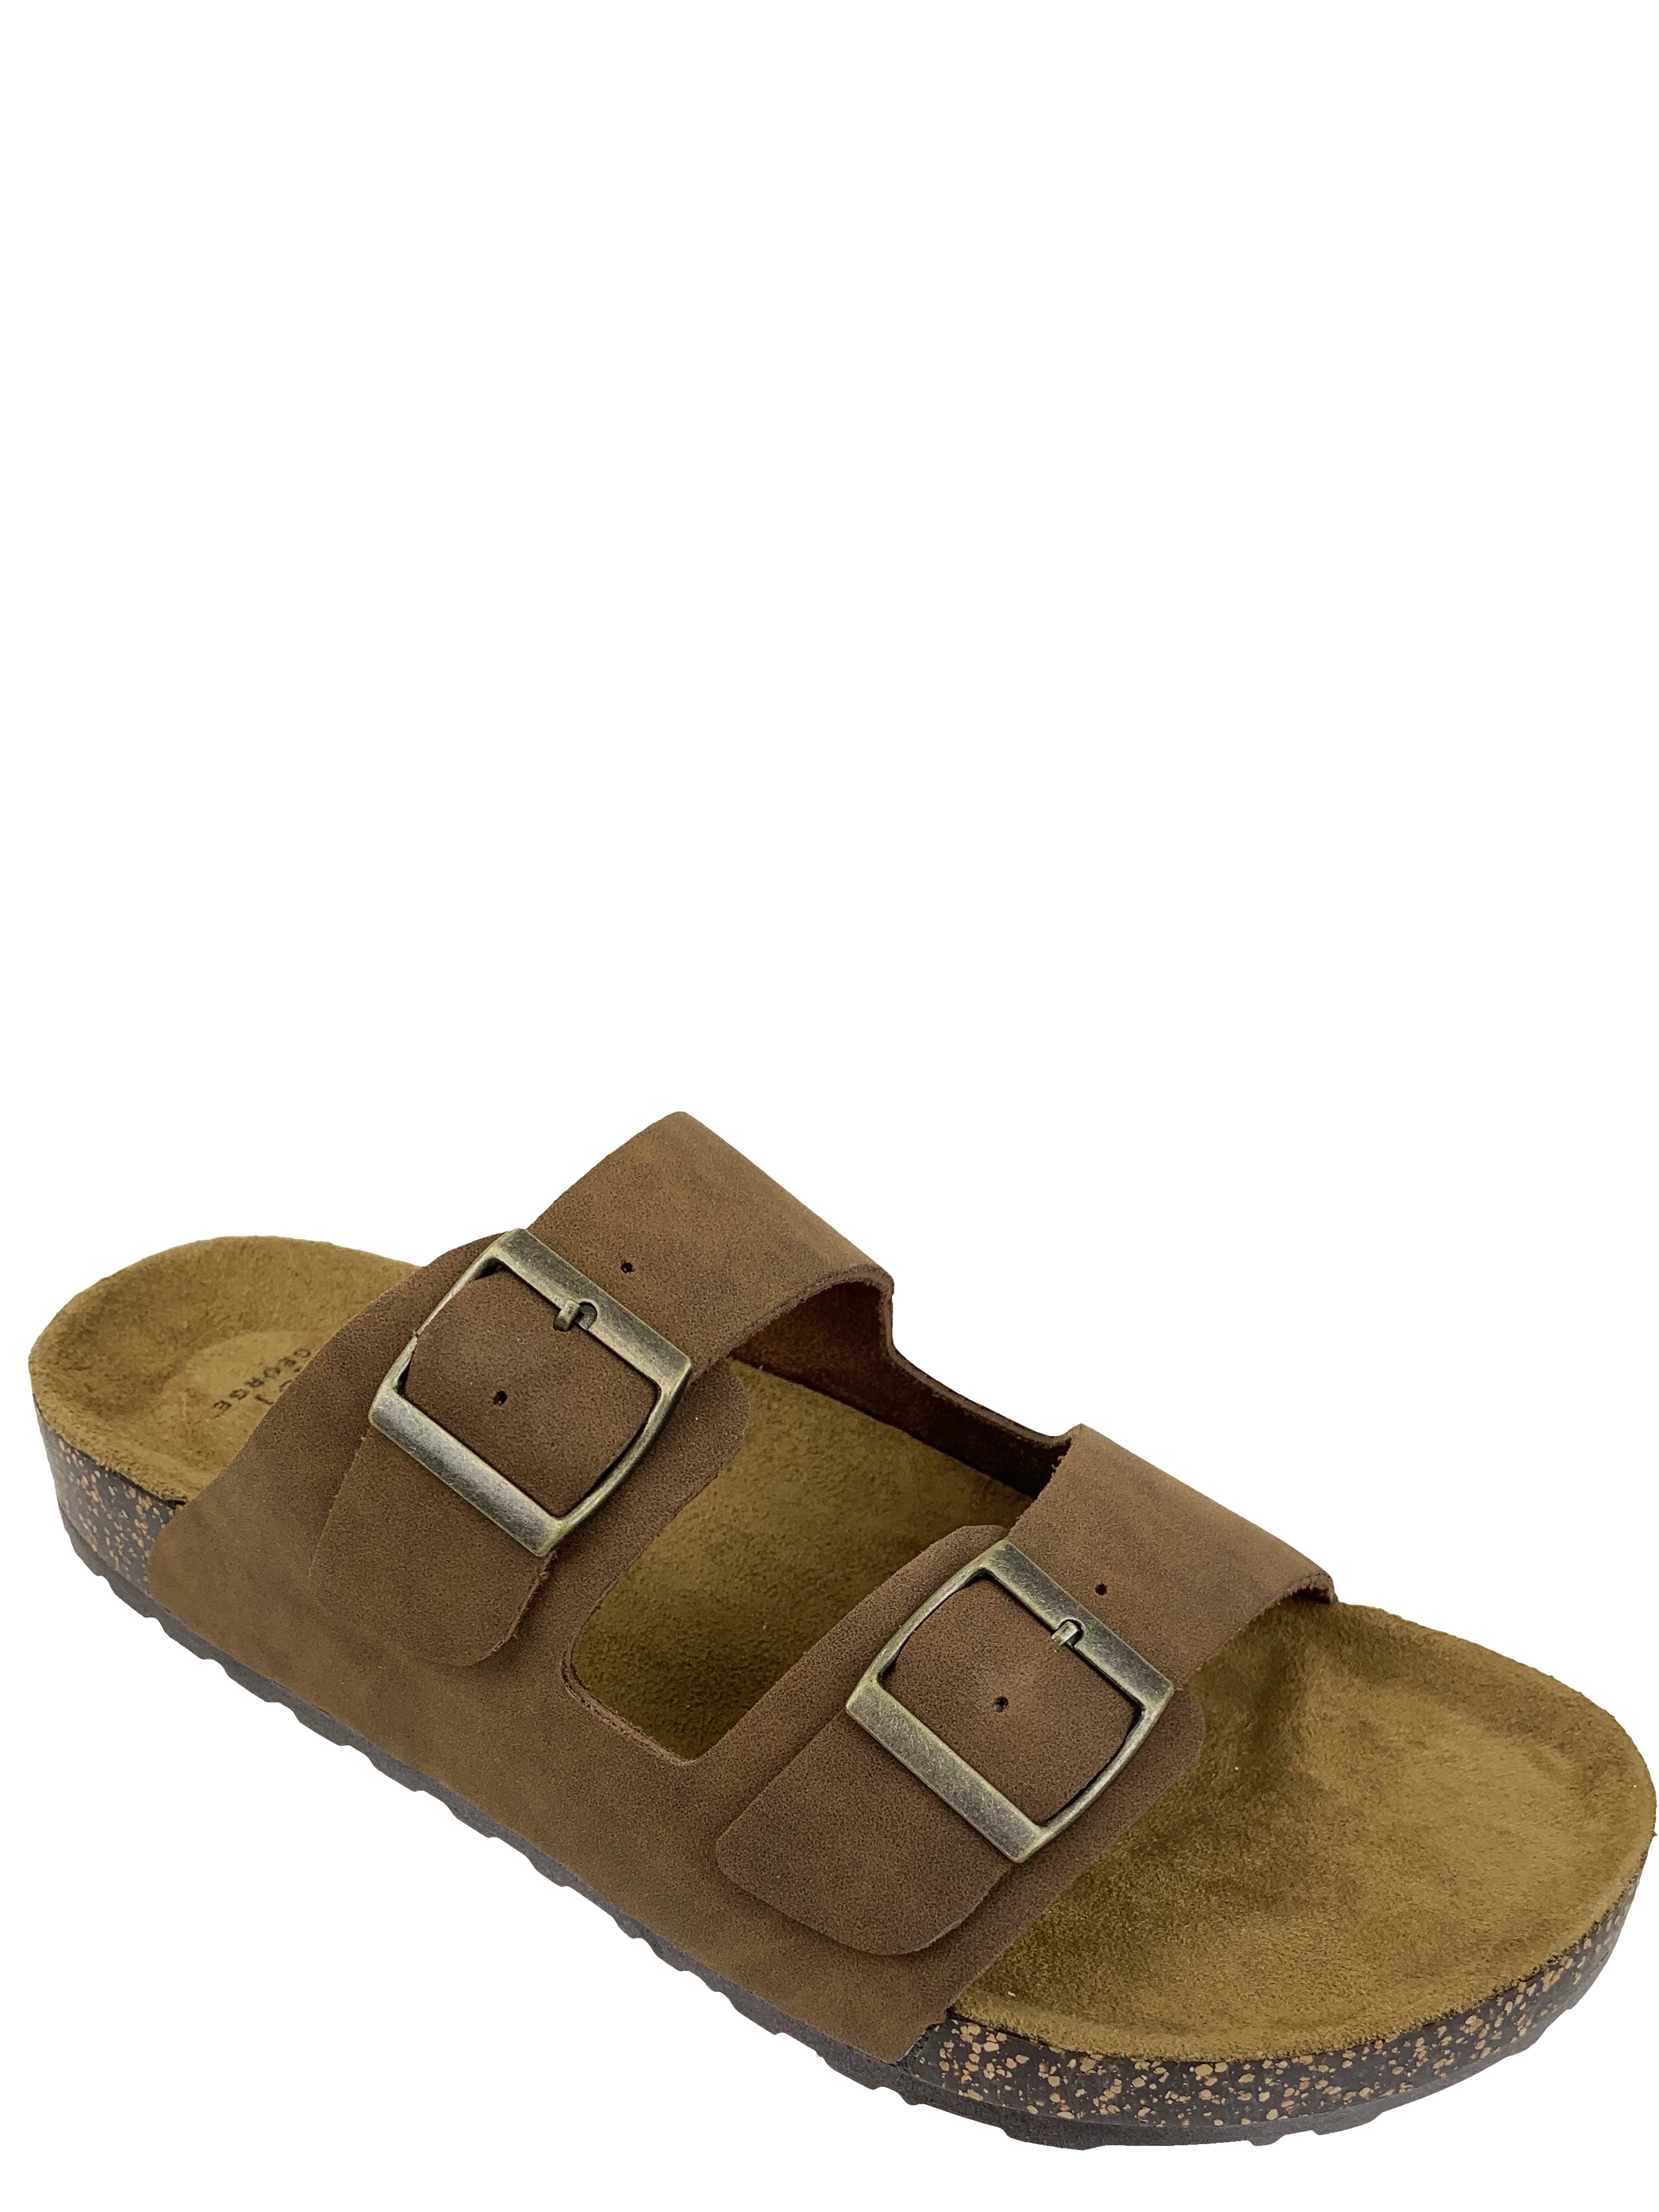 George Men's Comfort Strap Sandals - Walmart.com